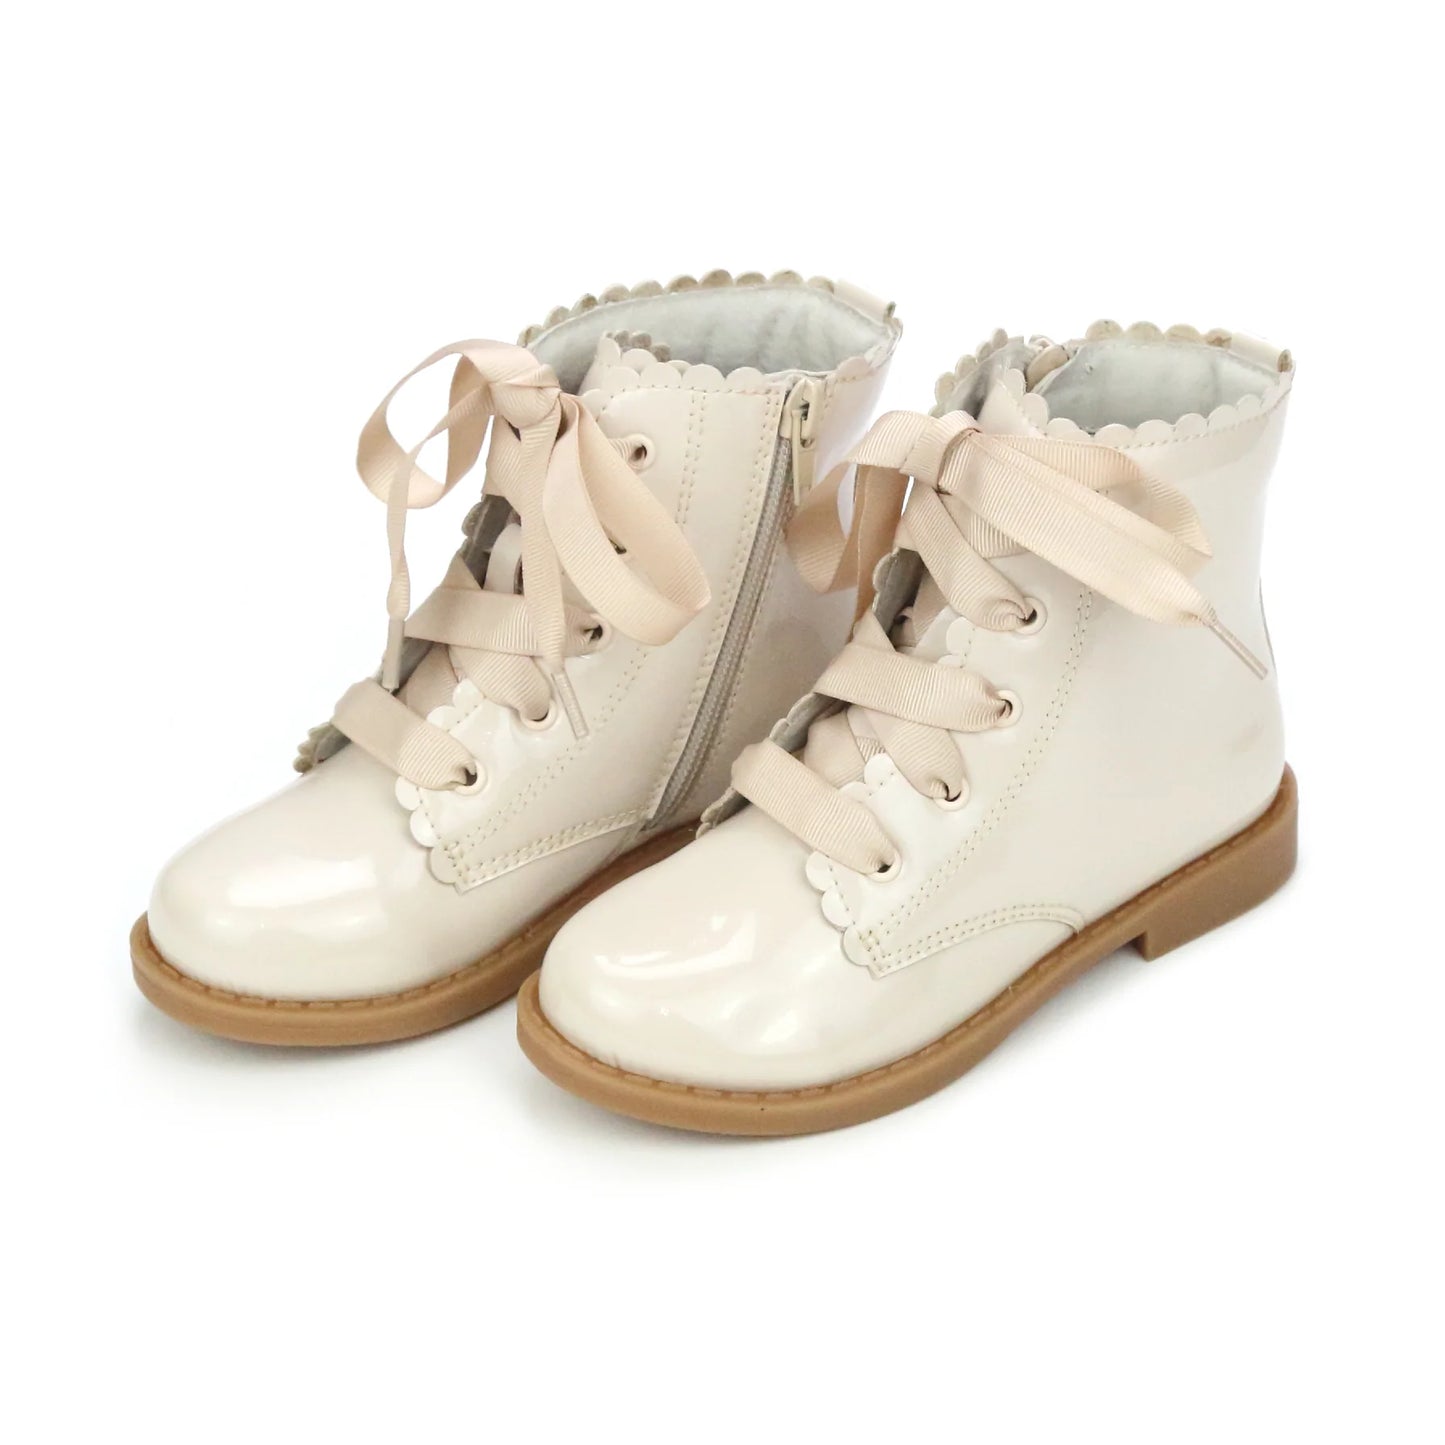 Josephine Scalloped Boot in Patent Cream  - Doodlebug's Children's Boutique